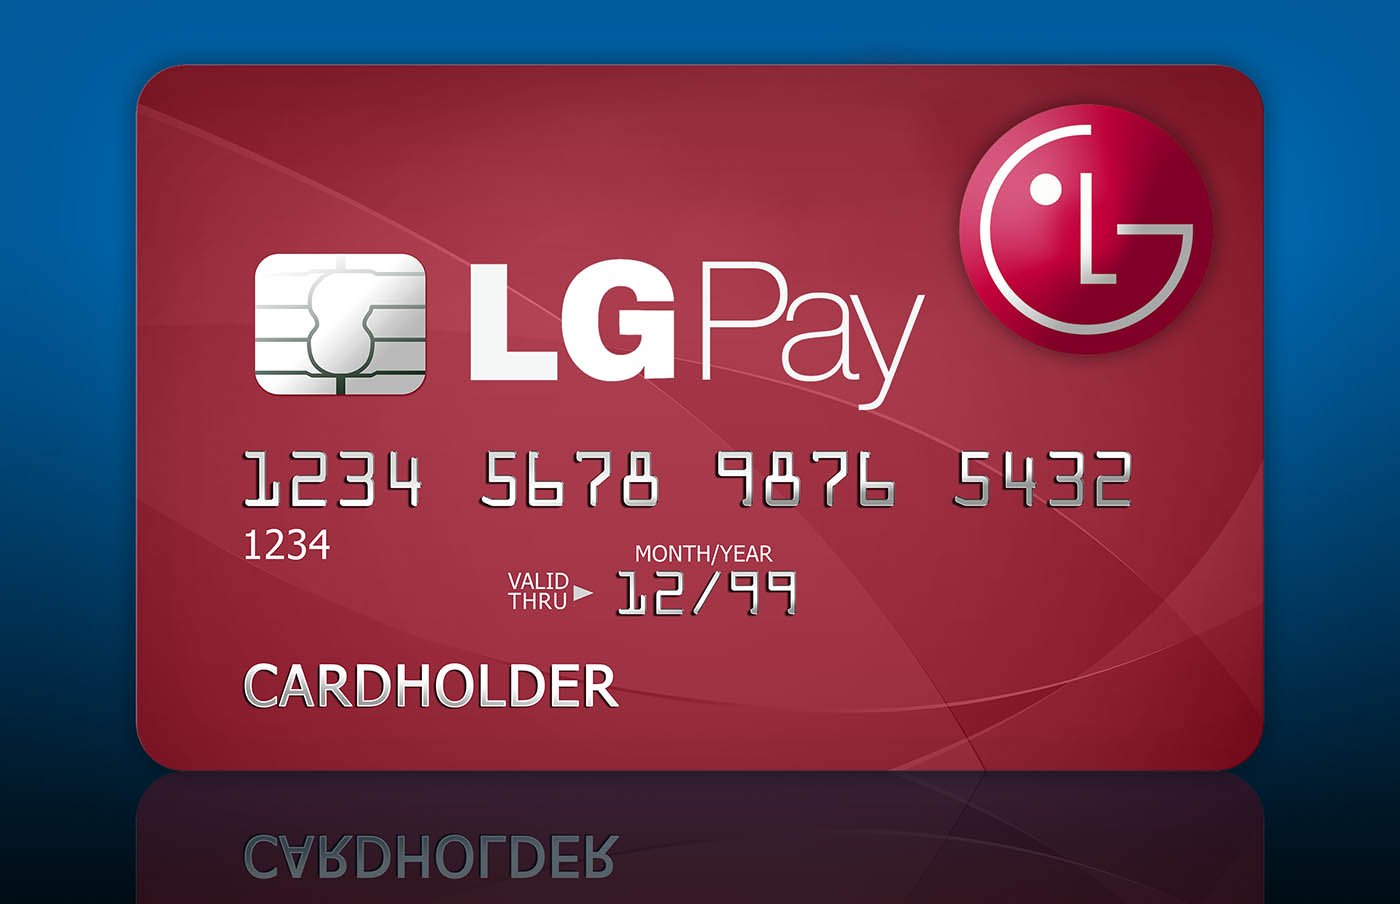 Tarjeta LG Pay credit-card